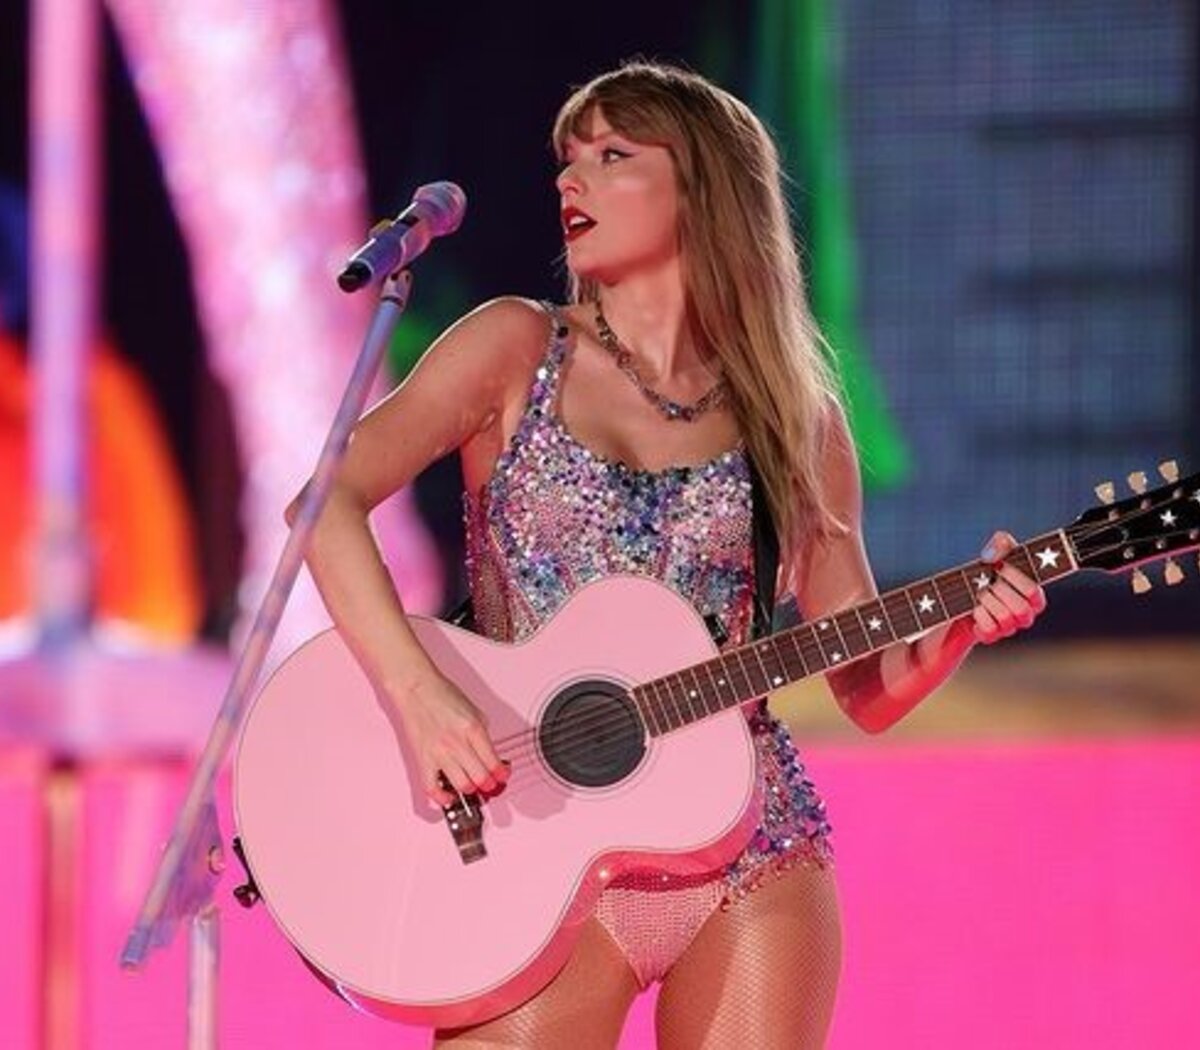 Llegó el merchandising de Taylor Swift en la previa de sus shows